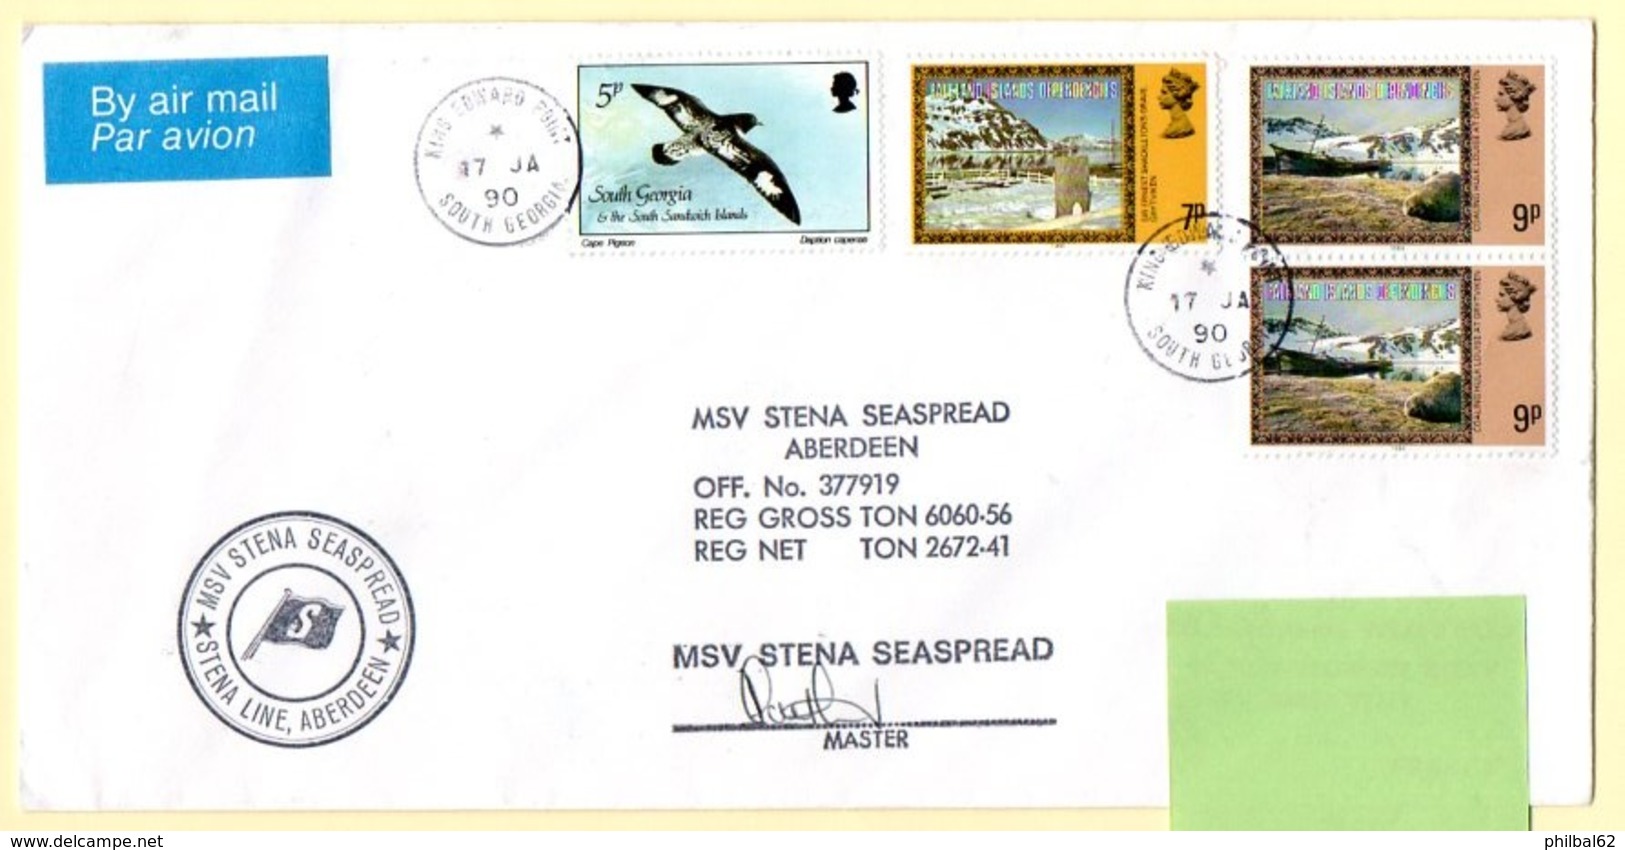 Polaire Falklands & South Georgia. Cachet MSV Stena Seaspread + Signature. Cachet à Date King Edouard South Georgia. - Research Programs